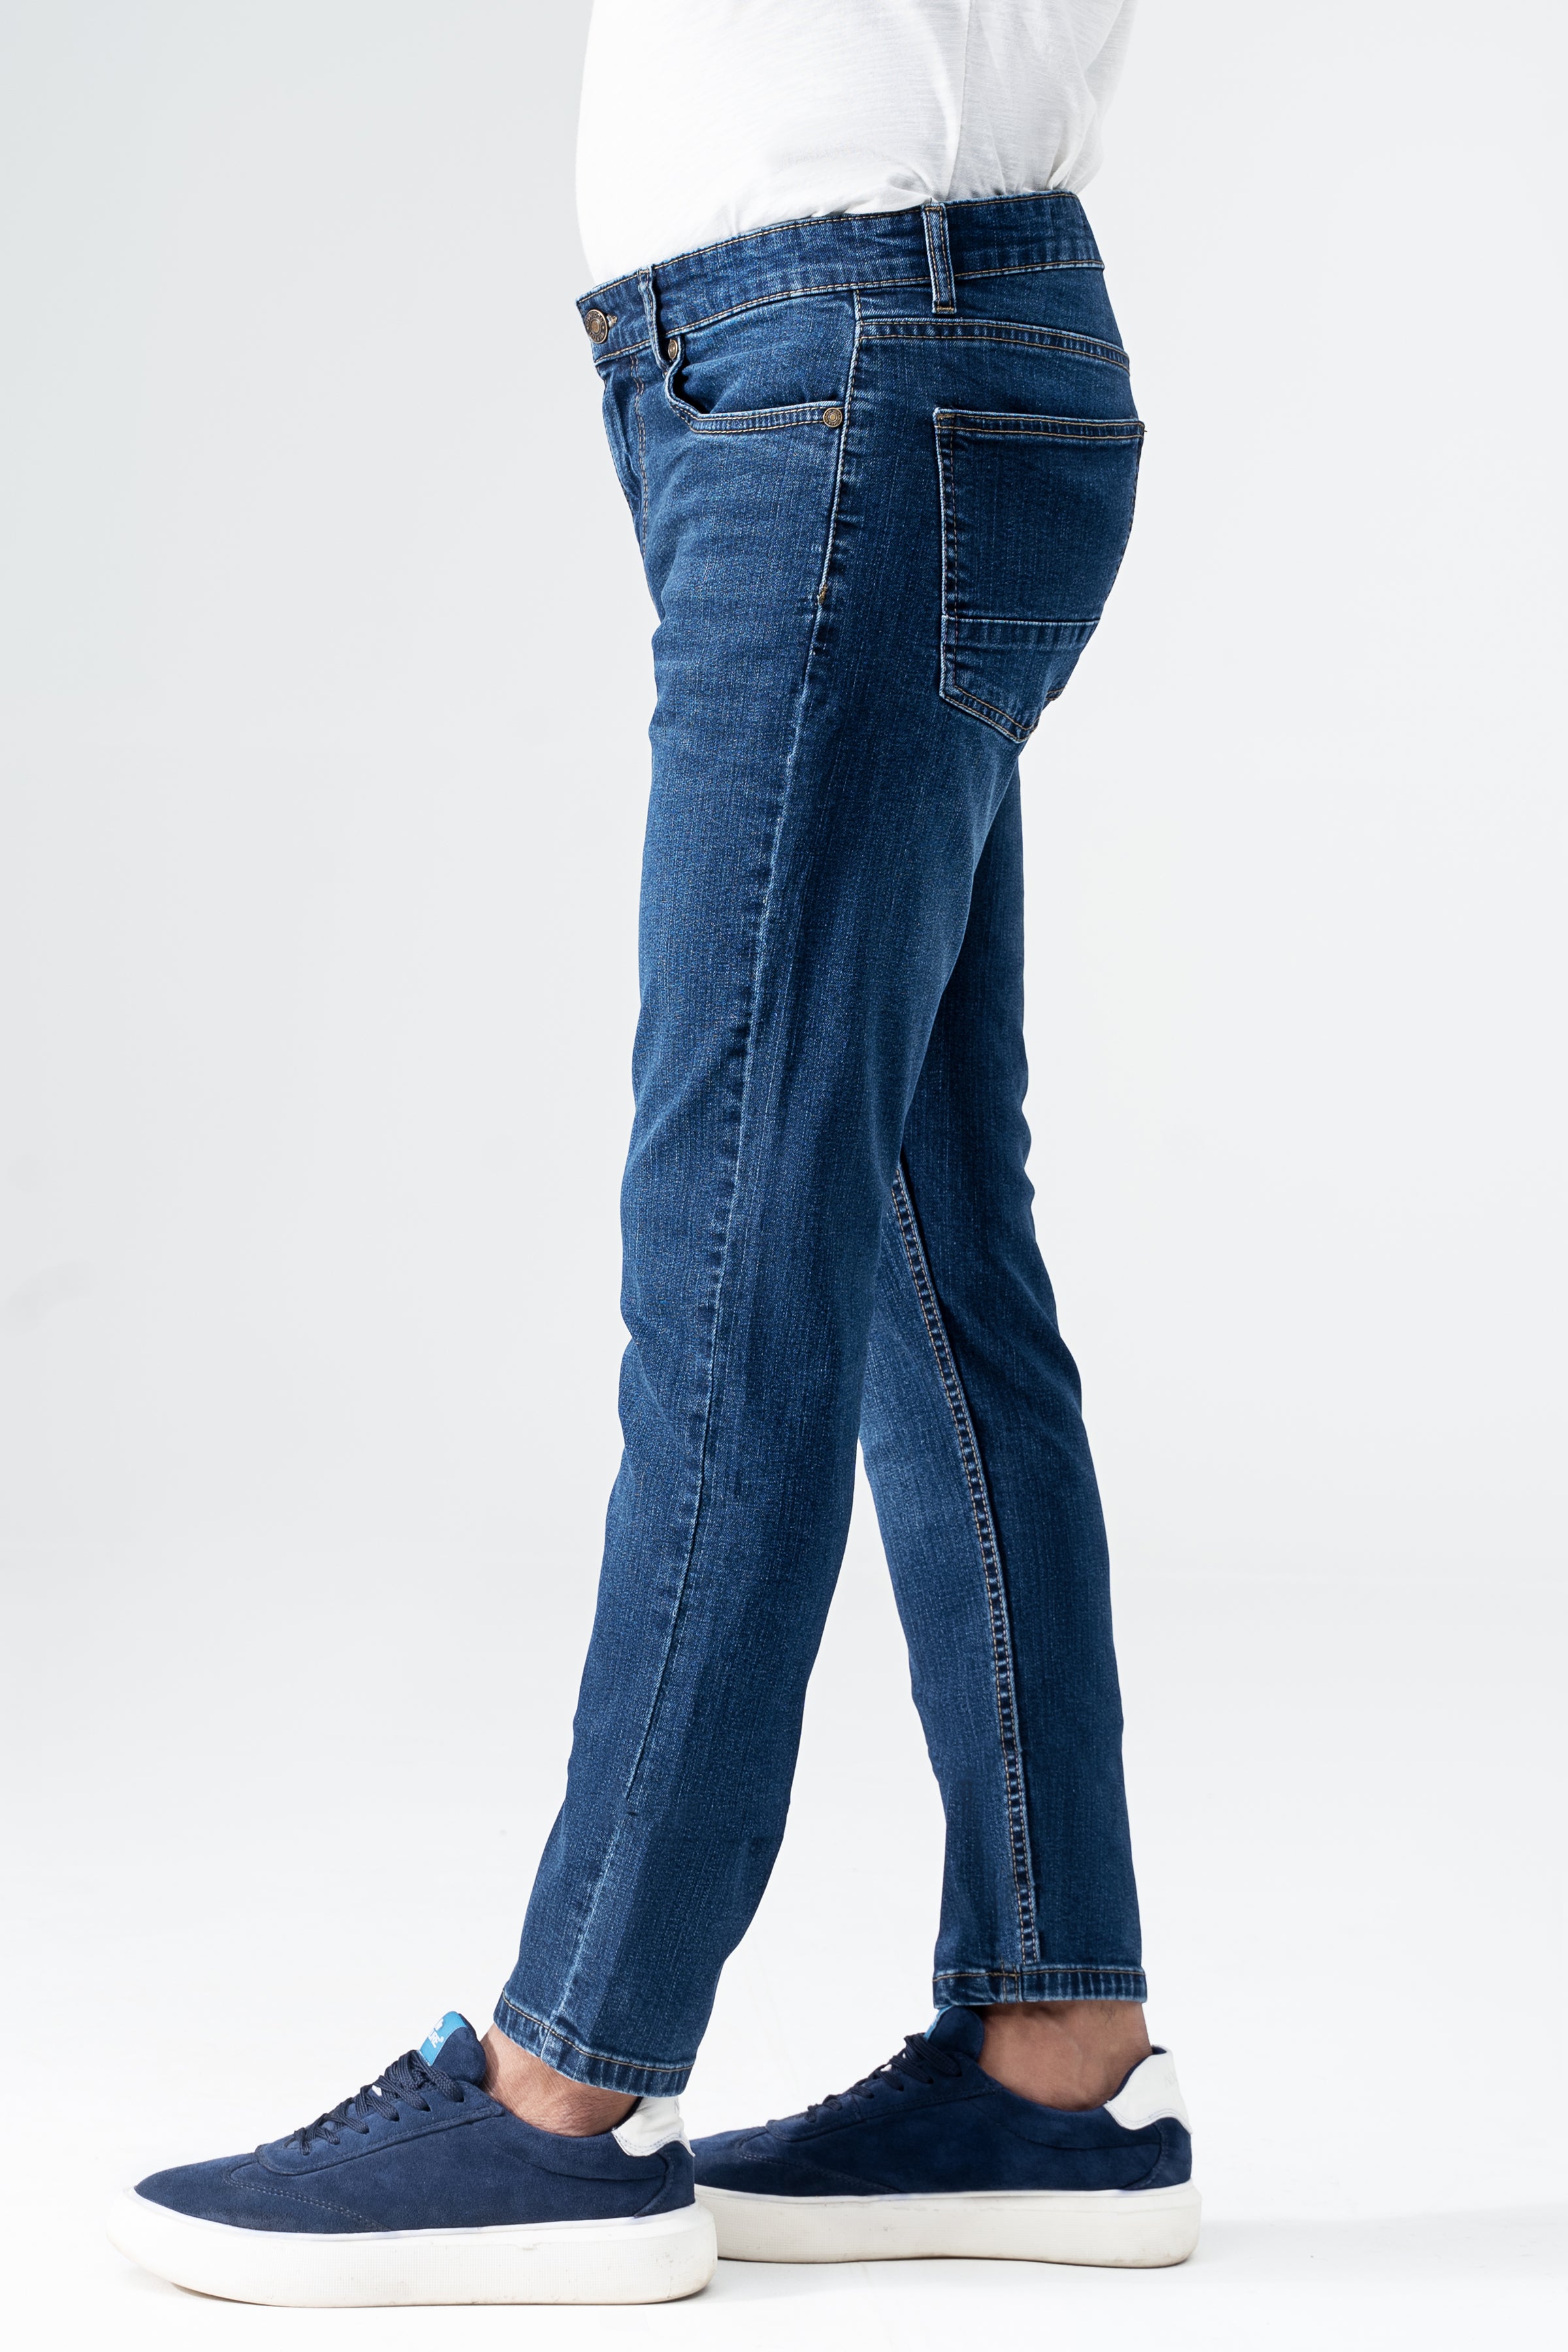 C&A Women's 5-Pocket Shapewear Jeans Casual Skinny Mid Rise / Mid